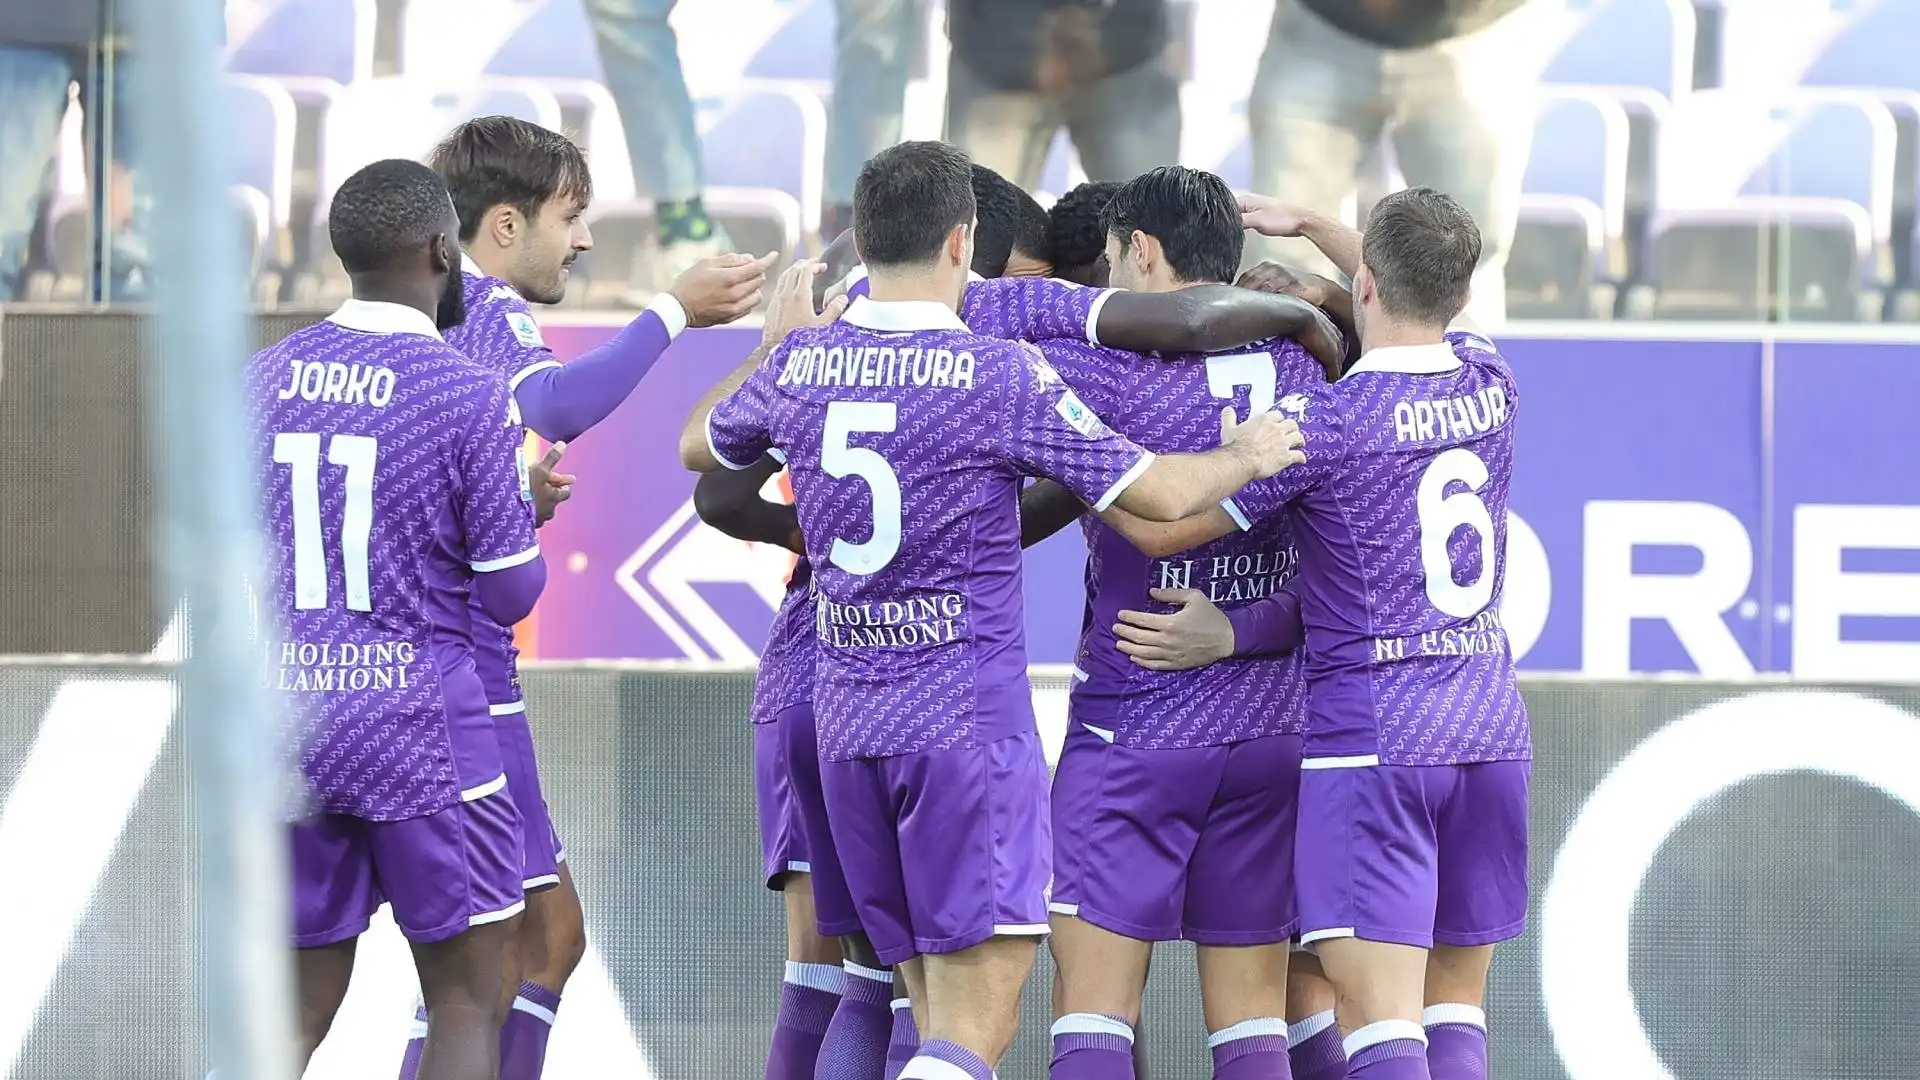 Serie A: la Fiorentina cala il tris, pari show tra Udinese e Verona